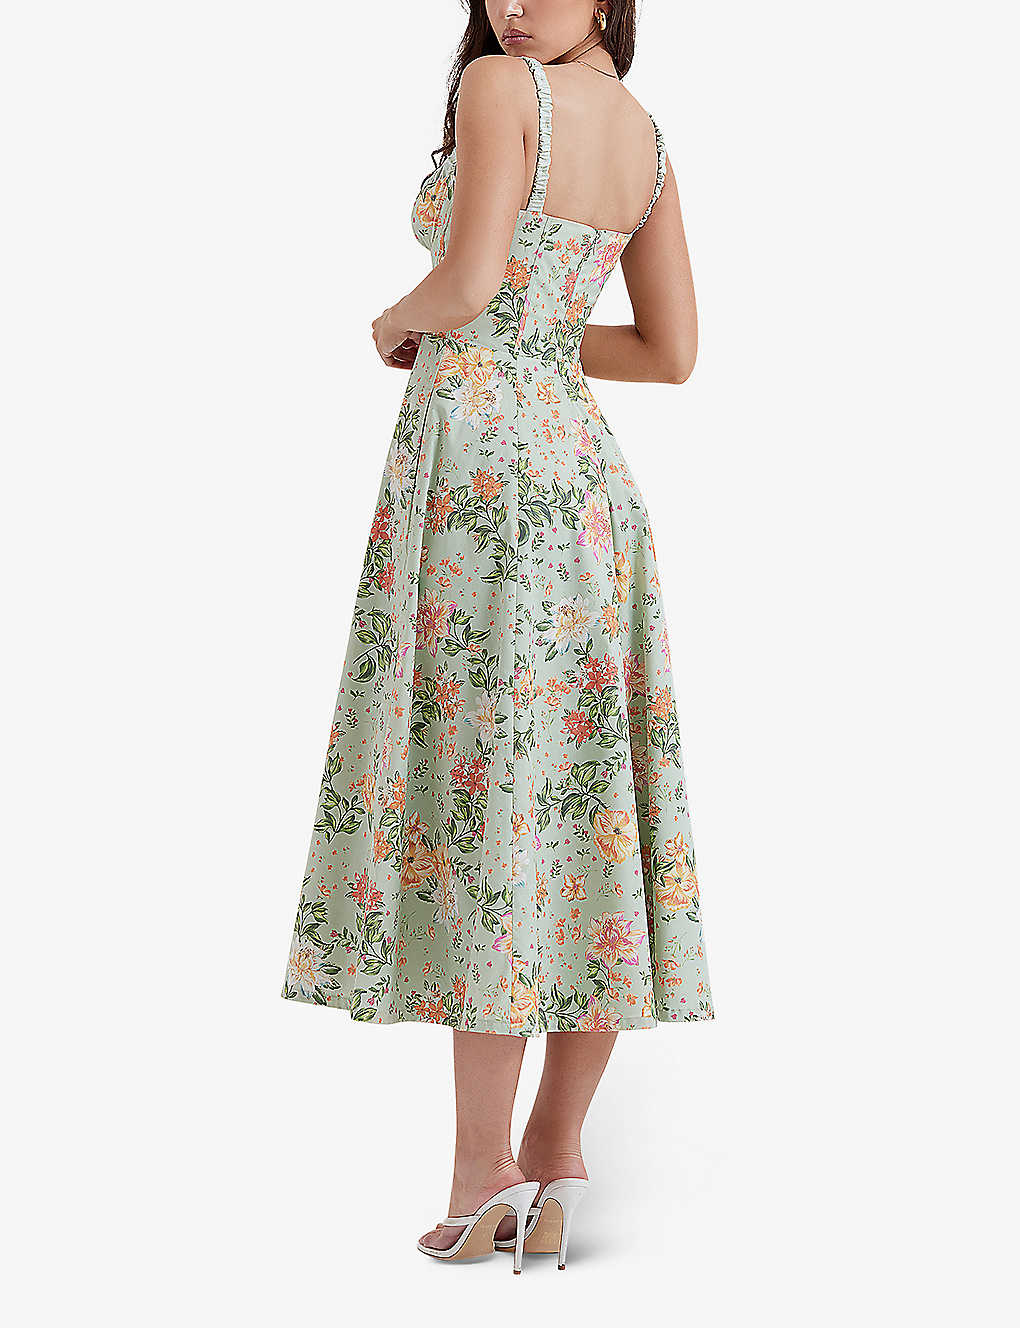 HOUSE OF CB Sabrina floral-print cotton-blend midi dress, Jade